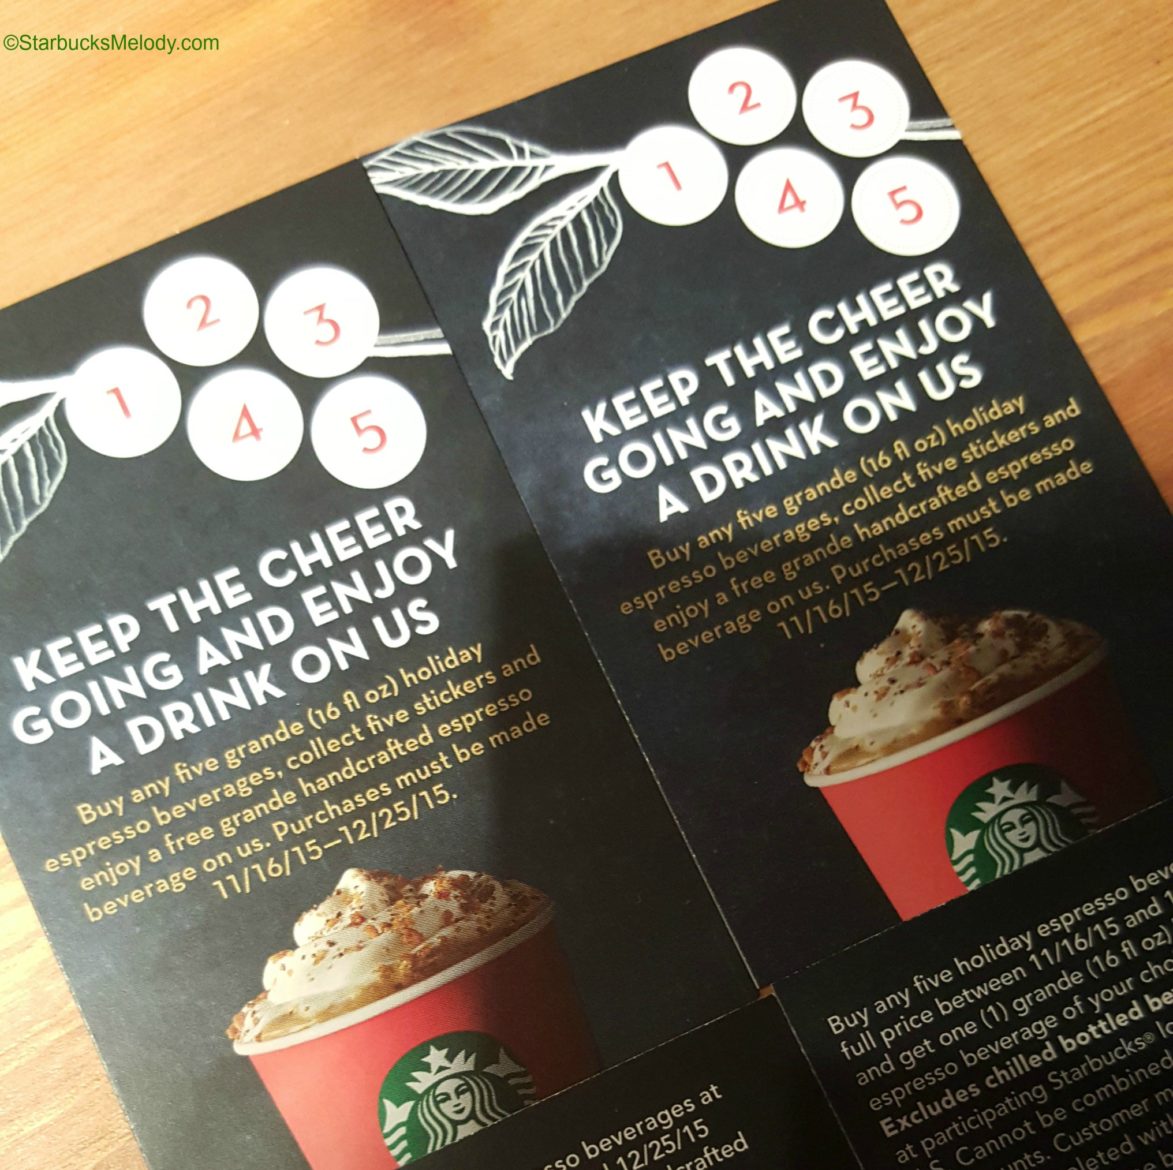 Buy 5 Grande Holiday Drinks at Starbucks: Get one free.